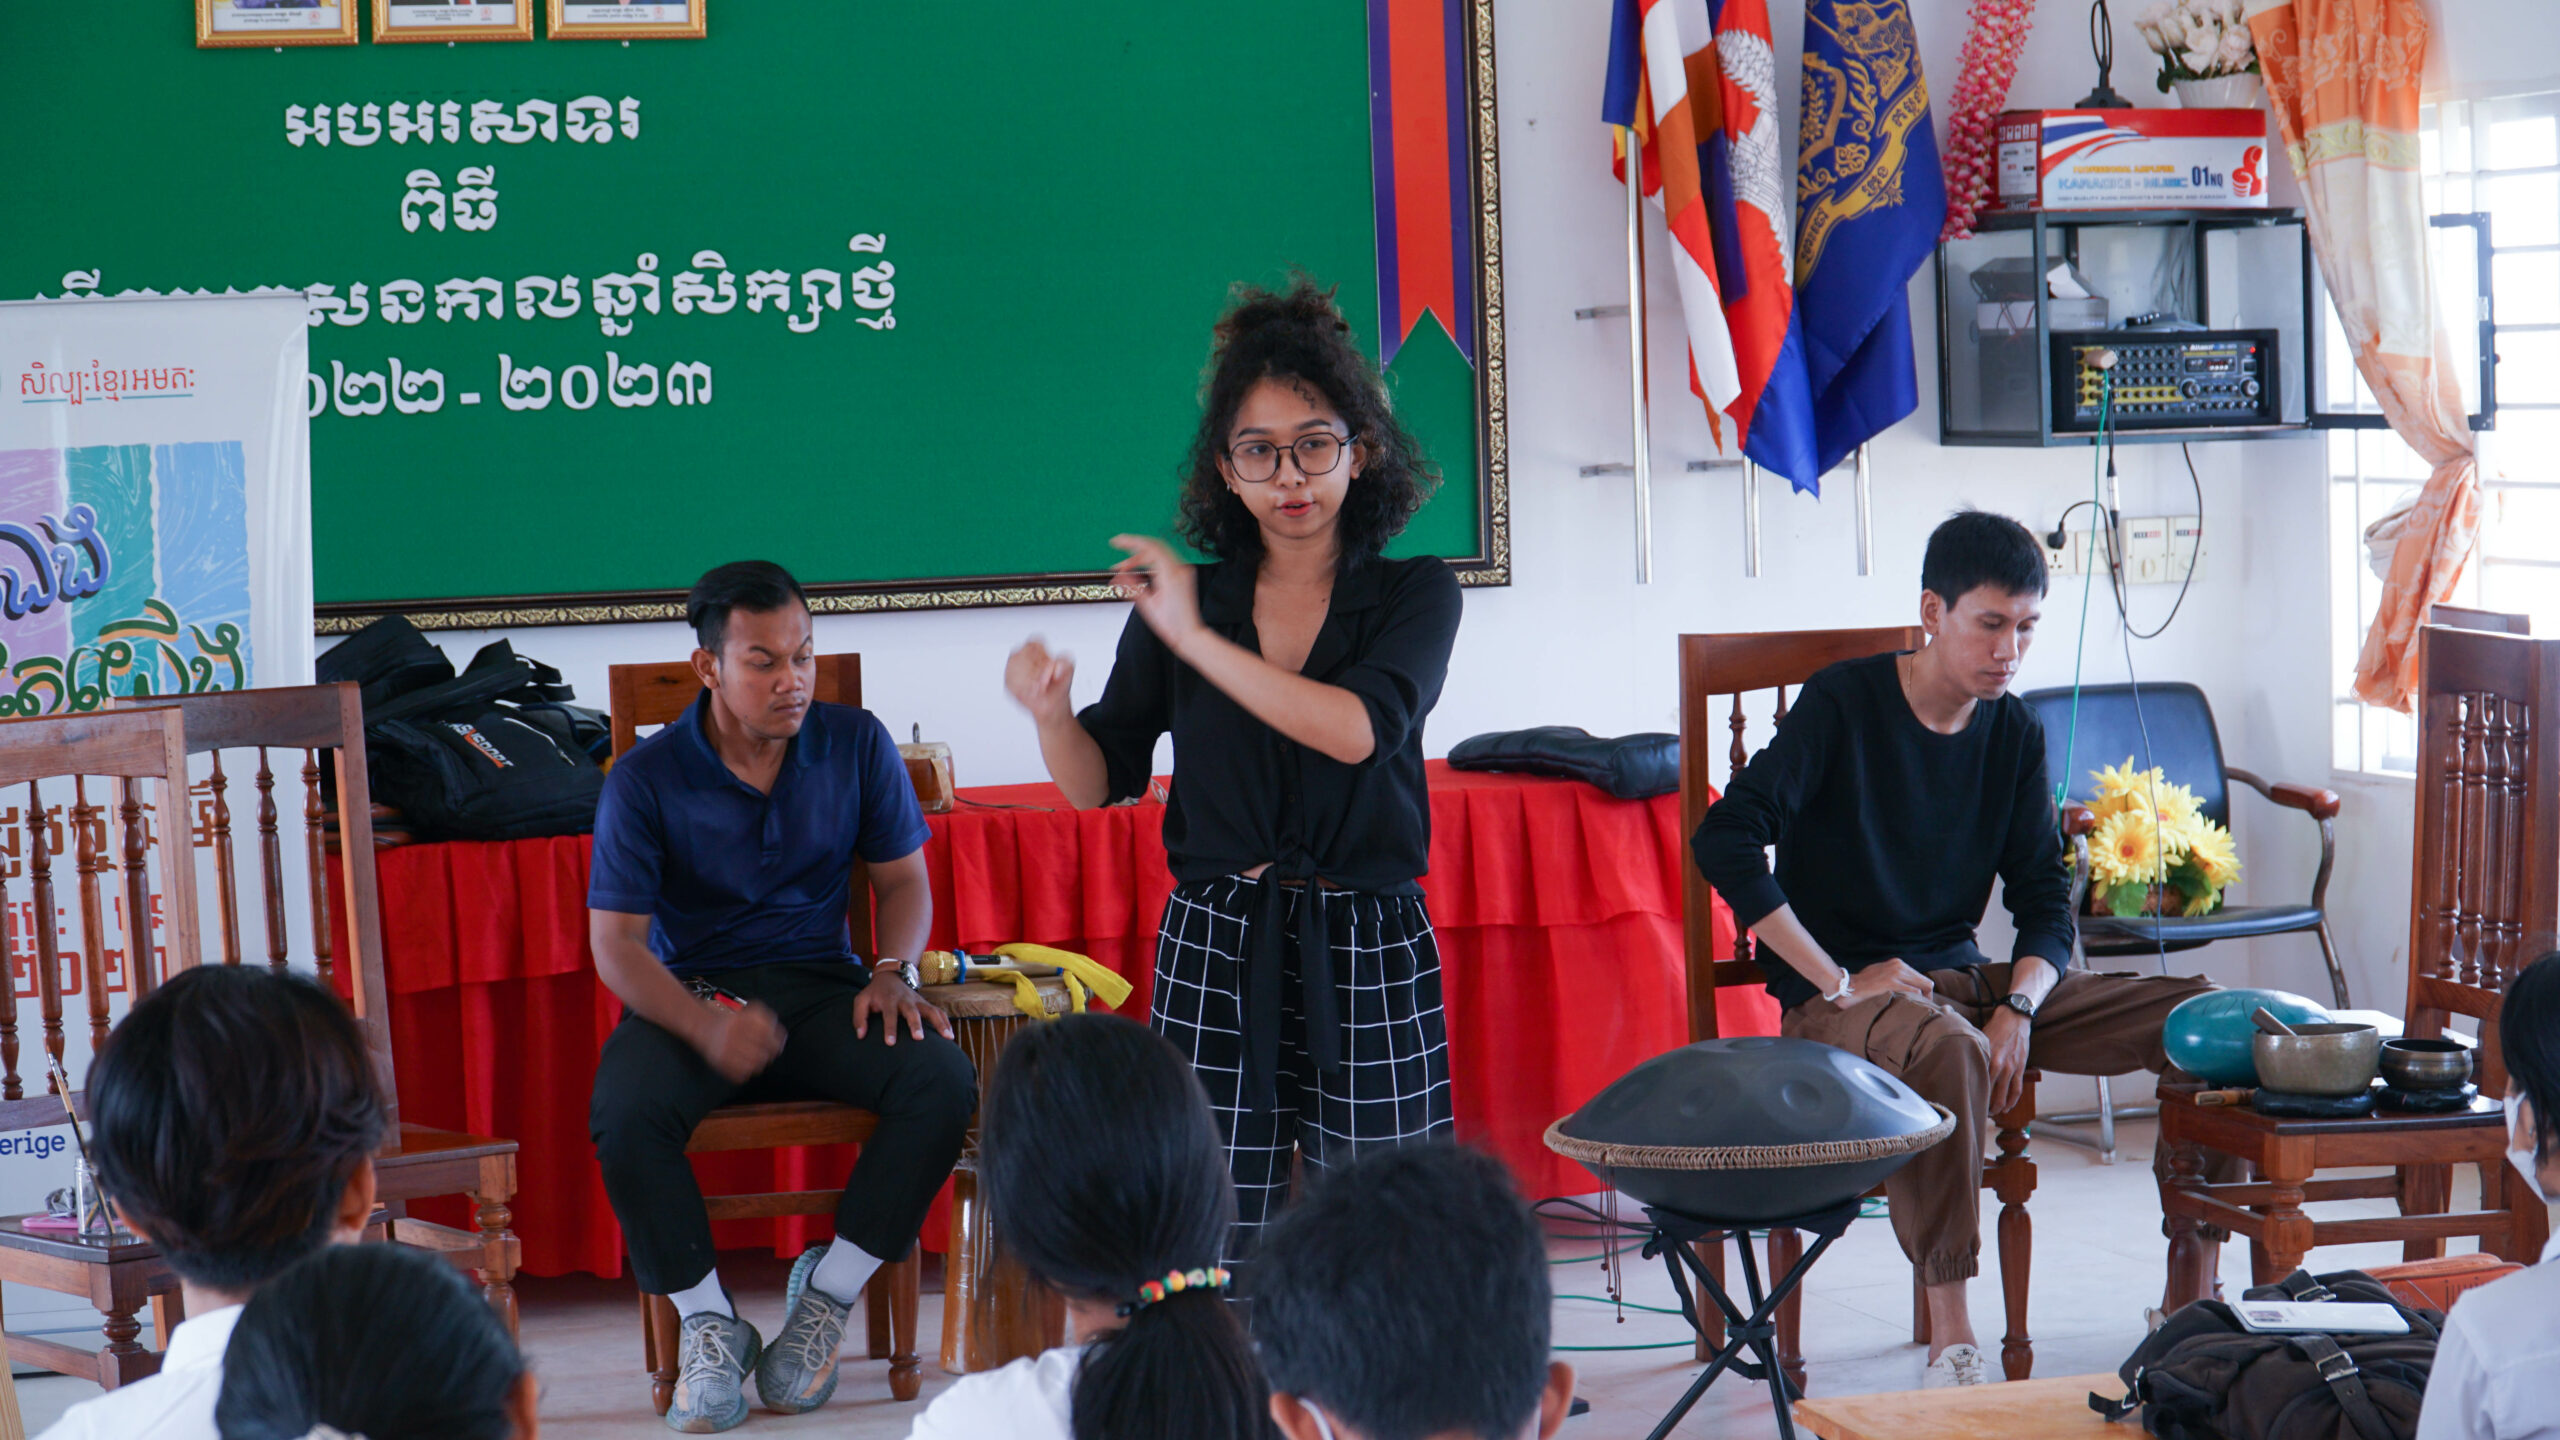 March 19: Kampong Chhnang_Interactive Workshop “HEALING WORKSHOP”